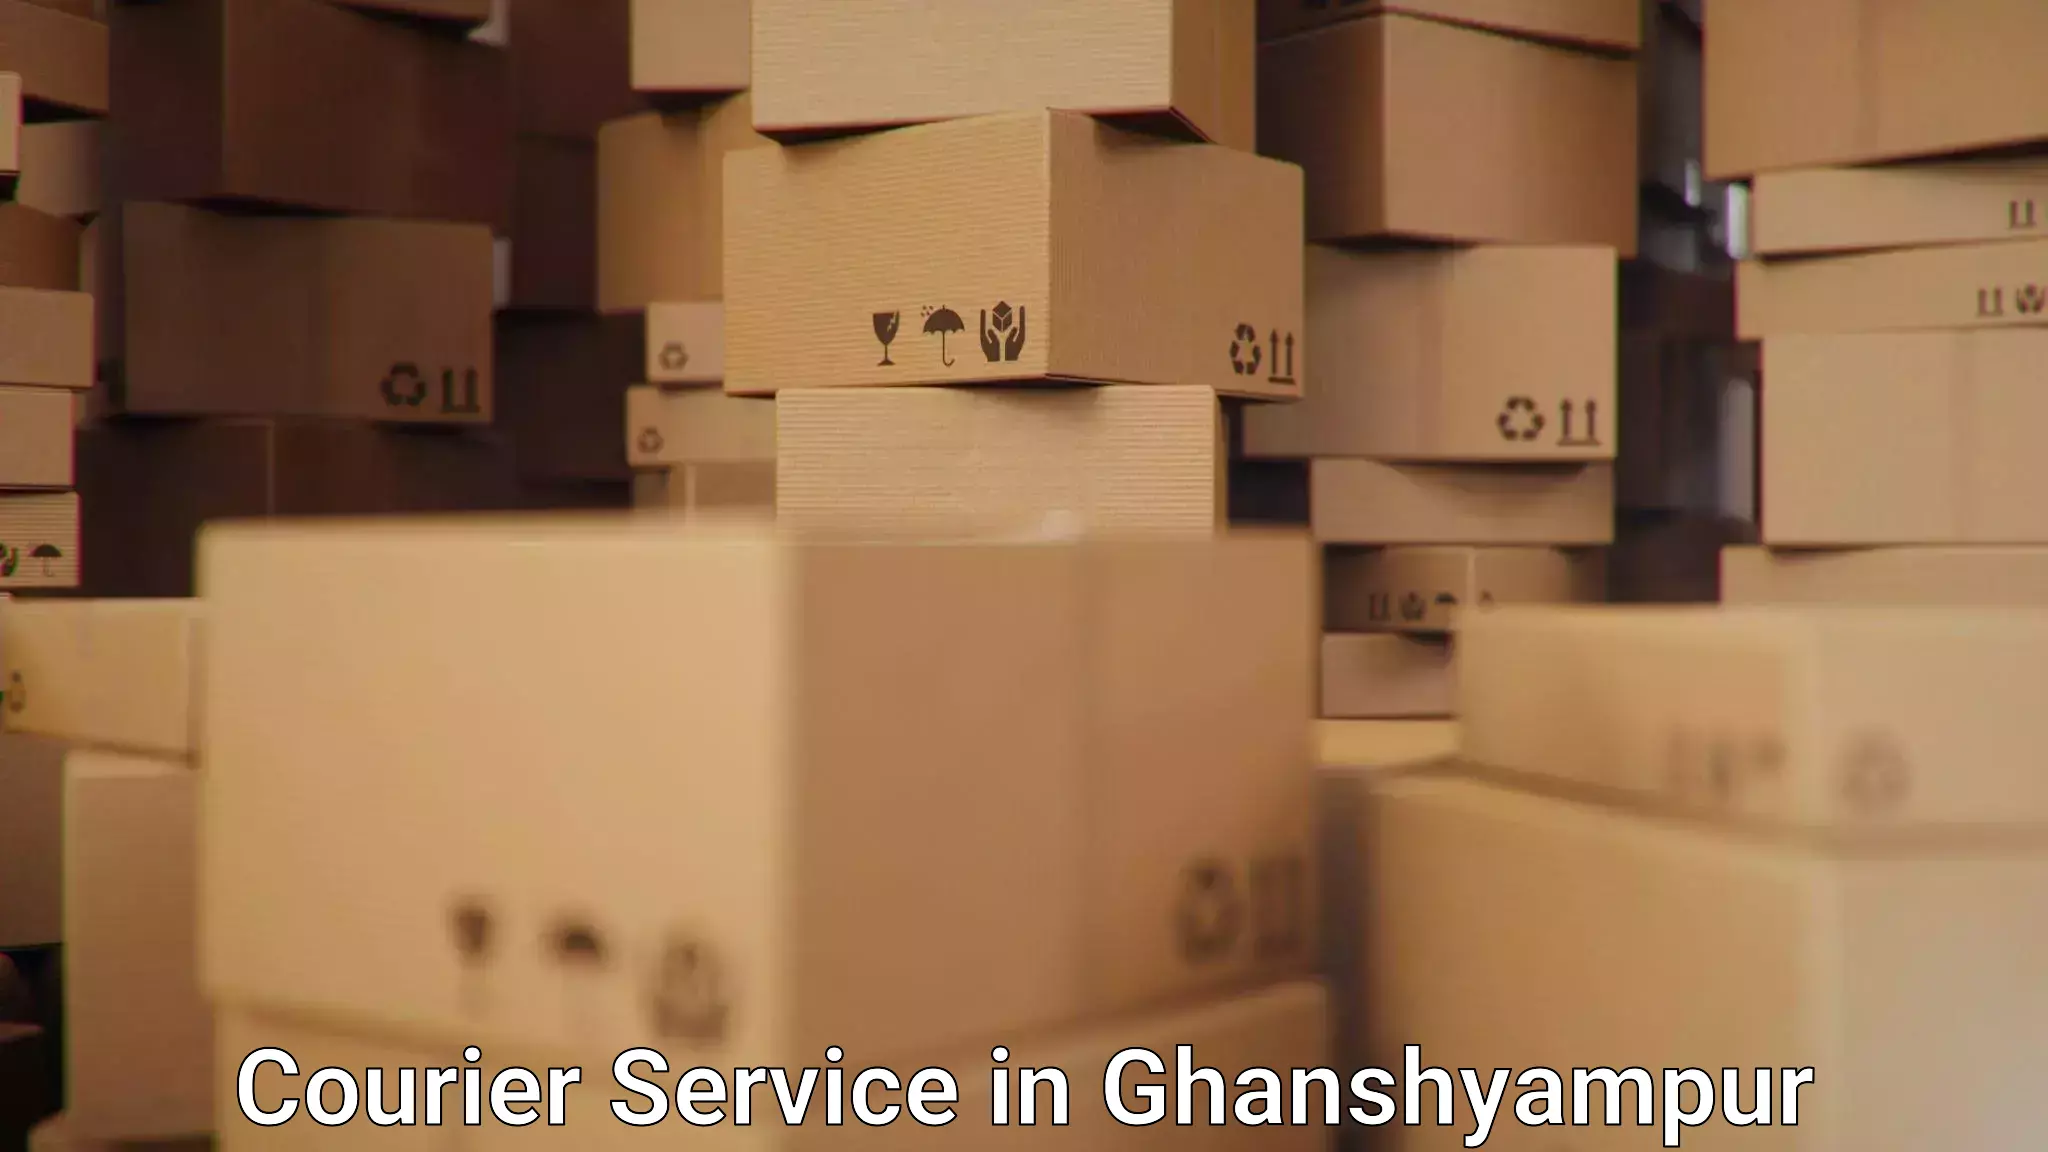 Efficient parcel service in Ghanshyampur